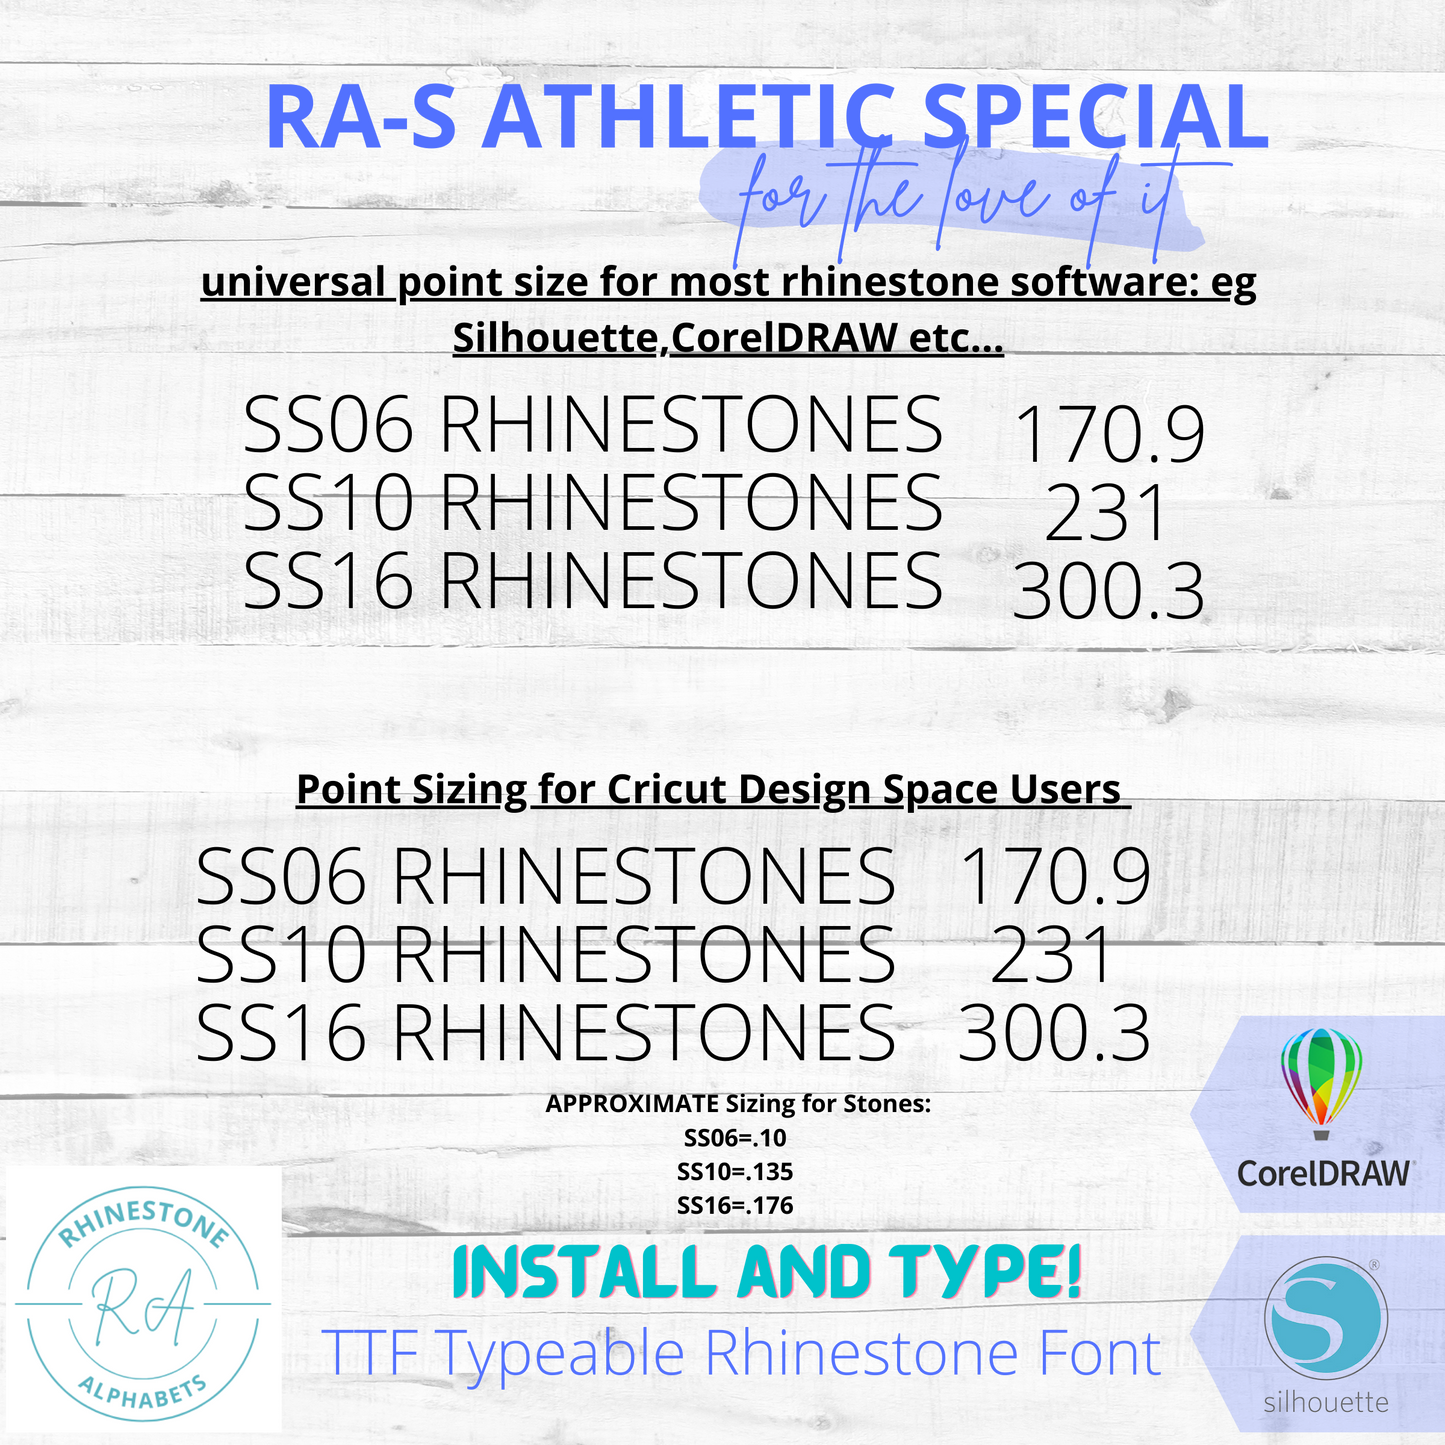 RA-S Athletic Special Combo  TTF Rhinestone Font